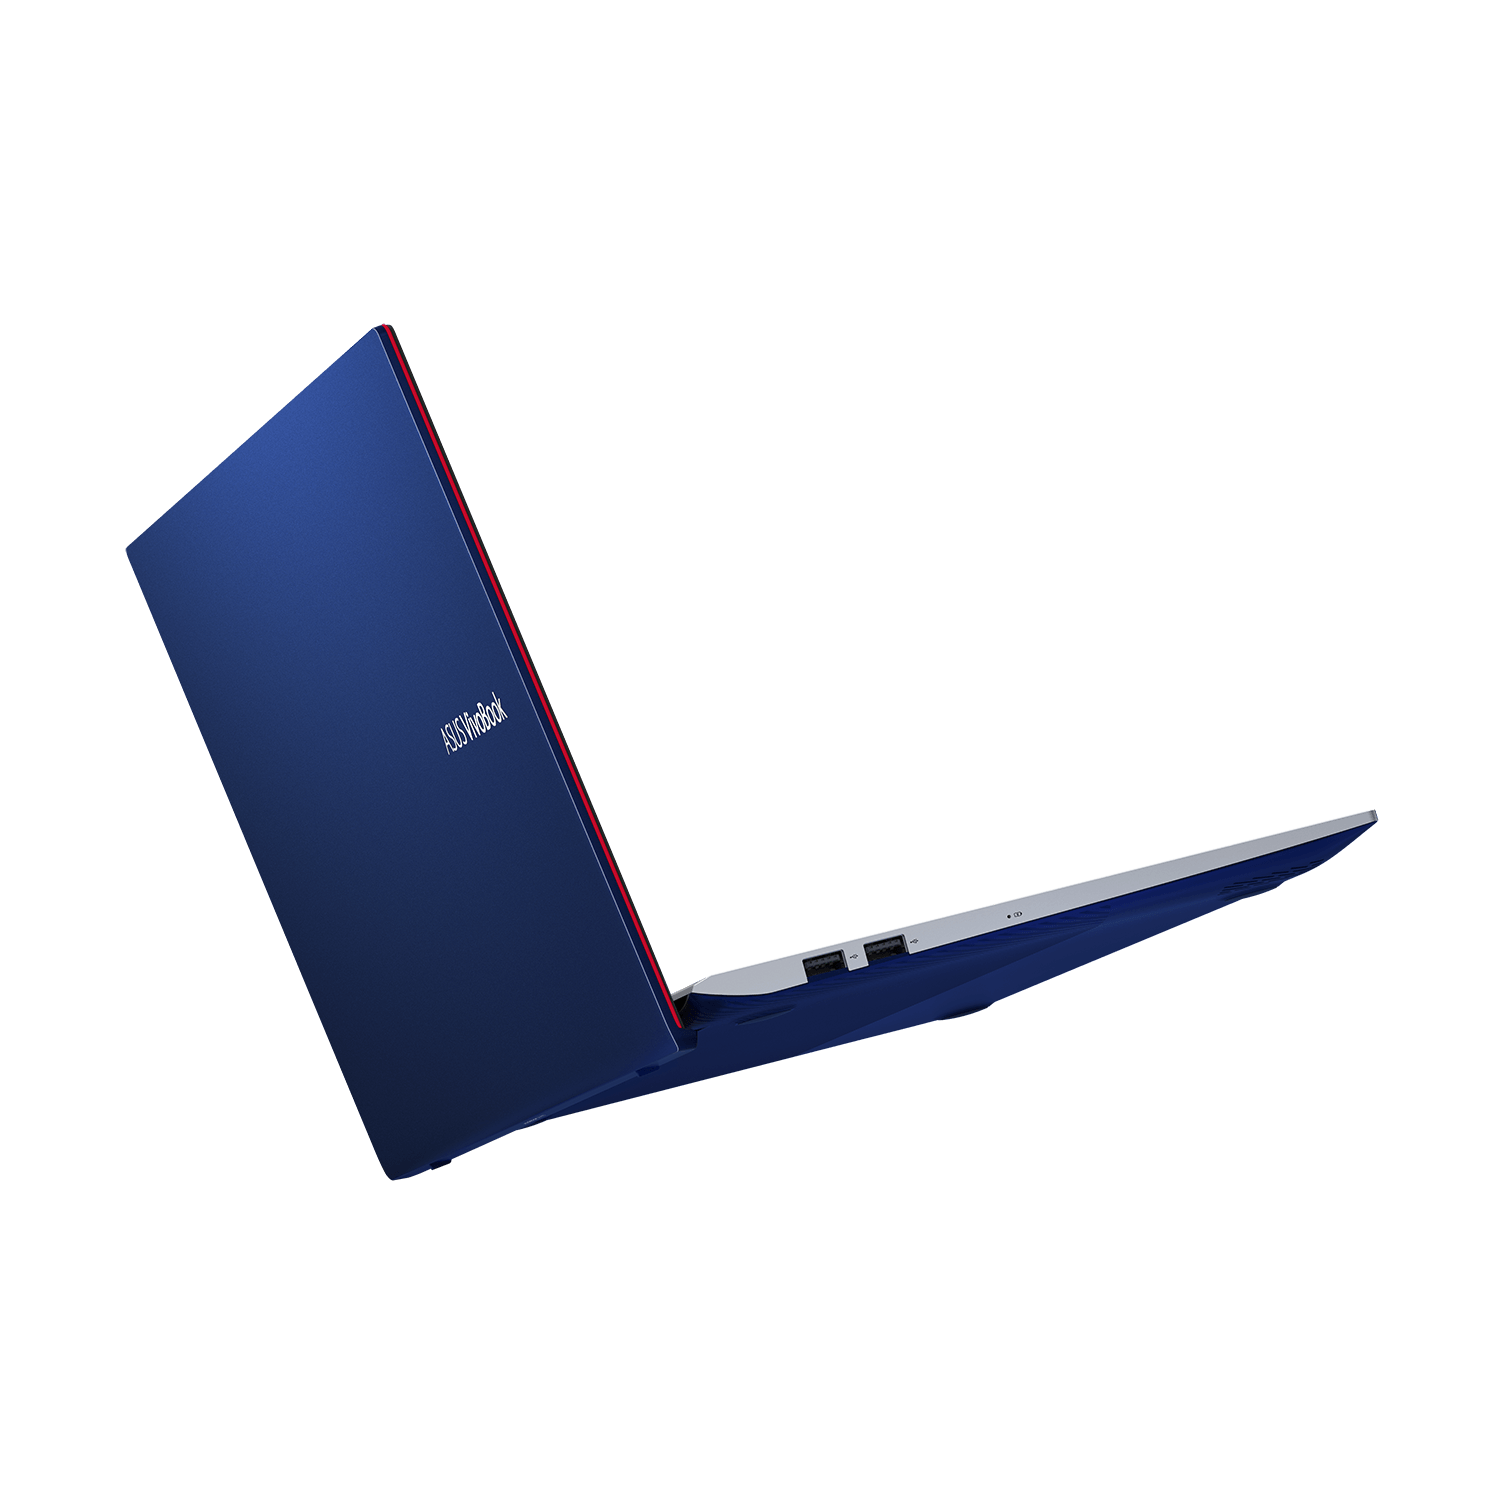 Laptop Asus VivoBook S15 S531FA-BQ105T (Xanh Coban)